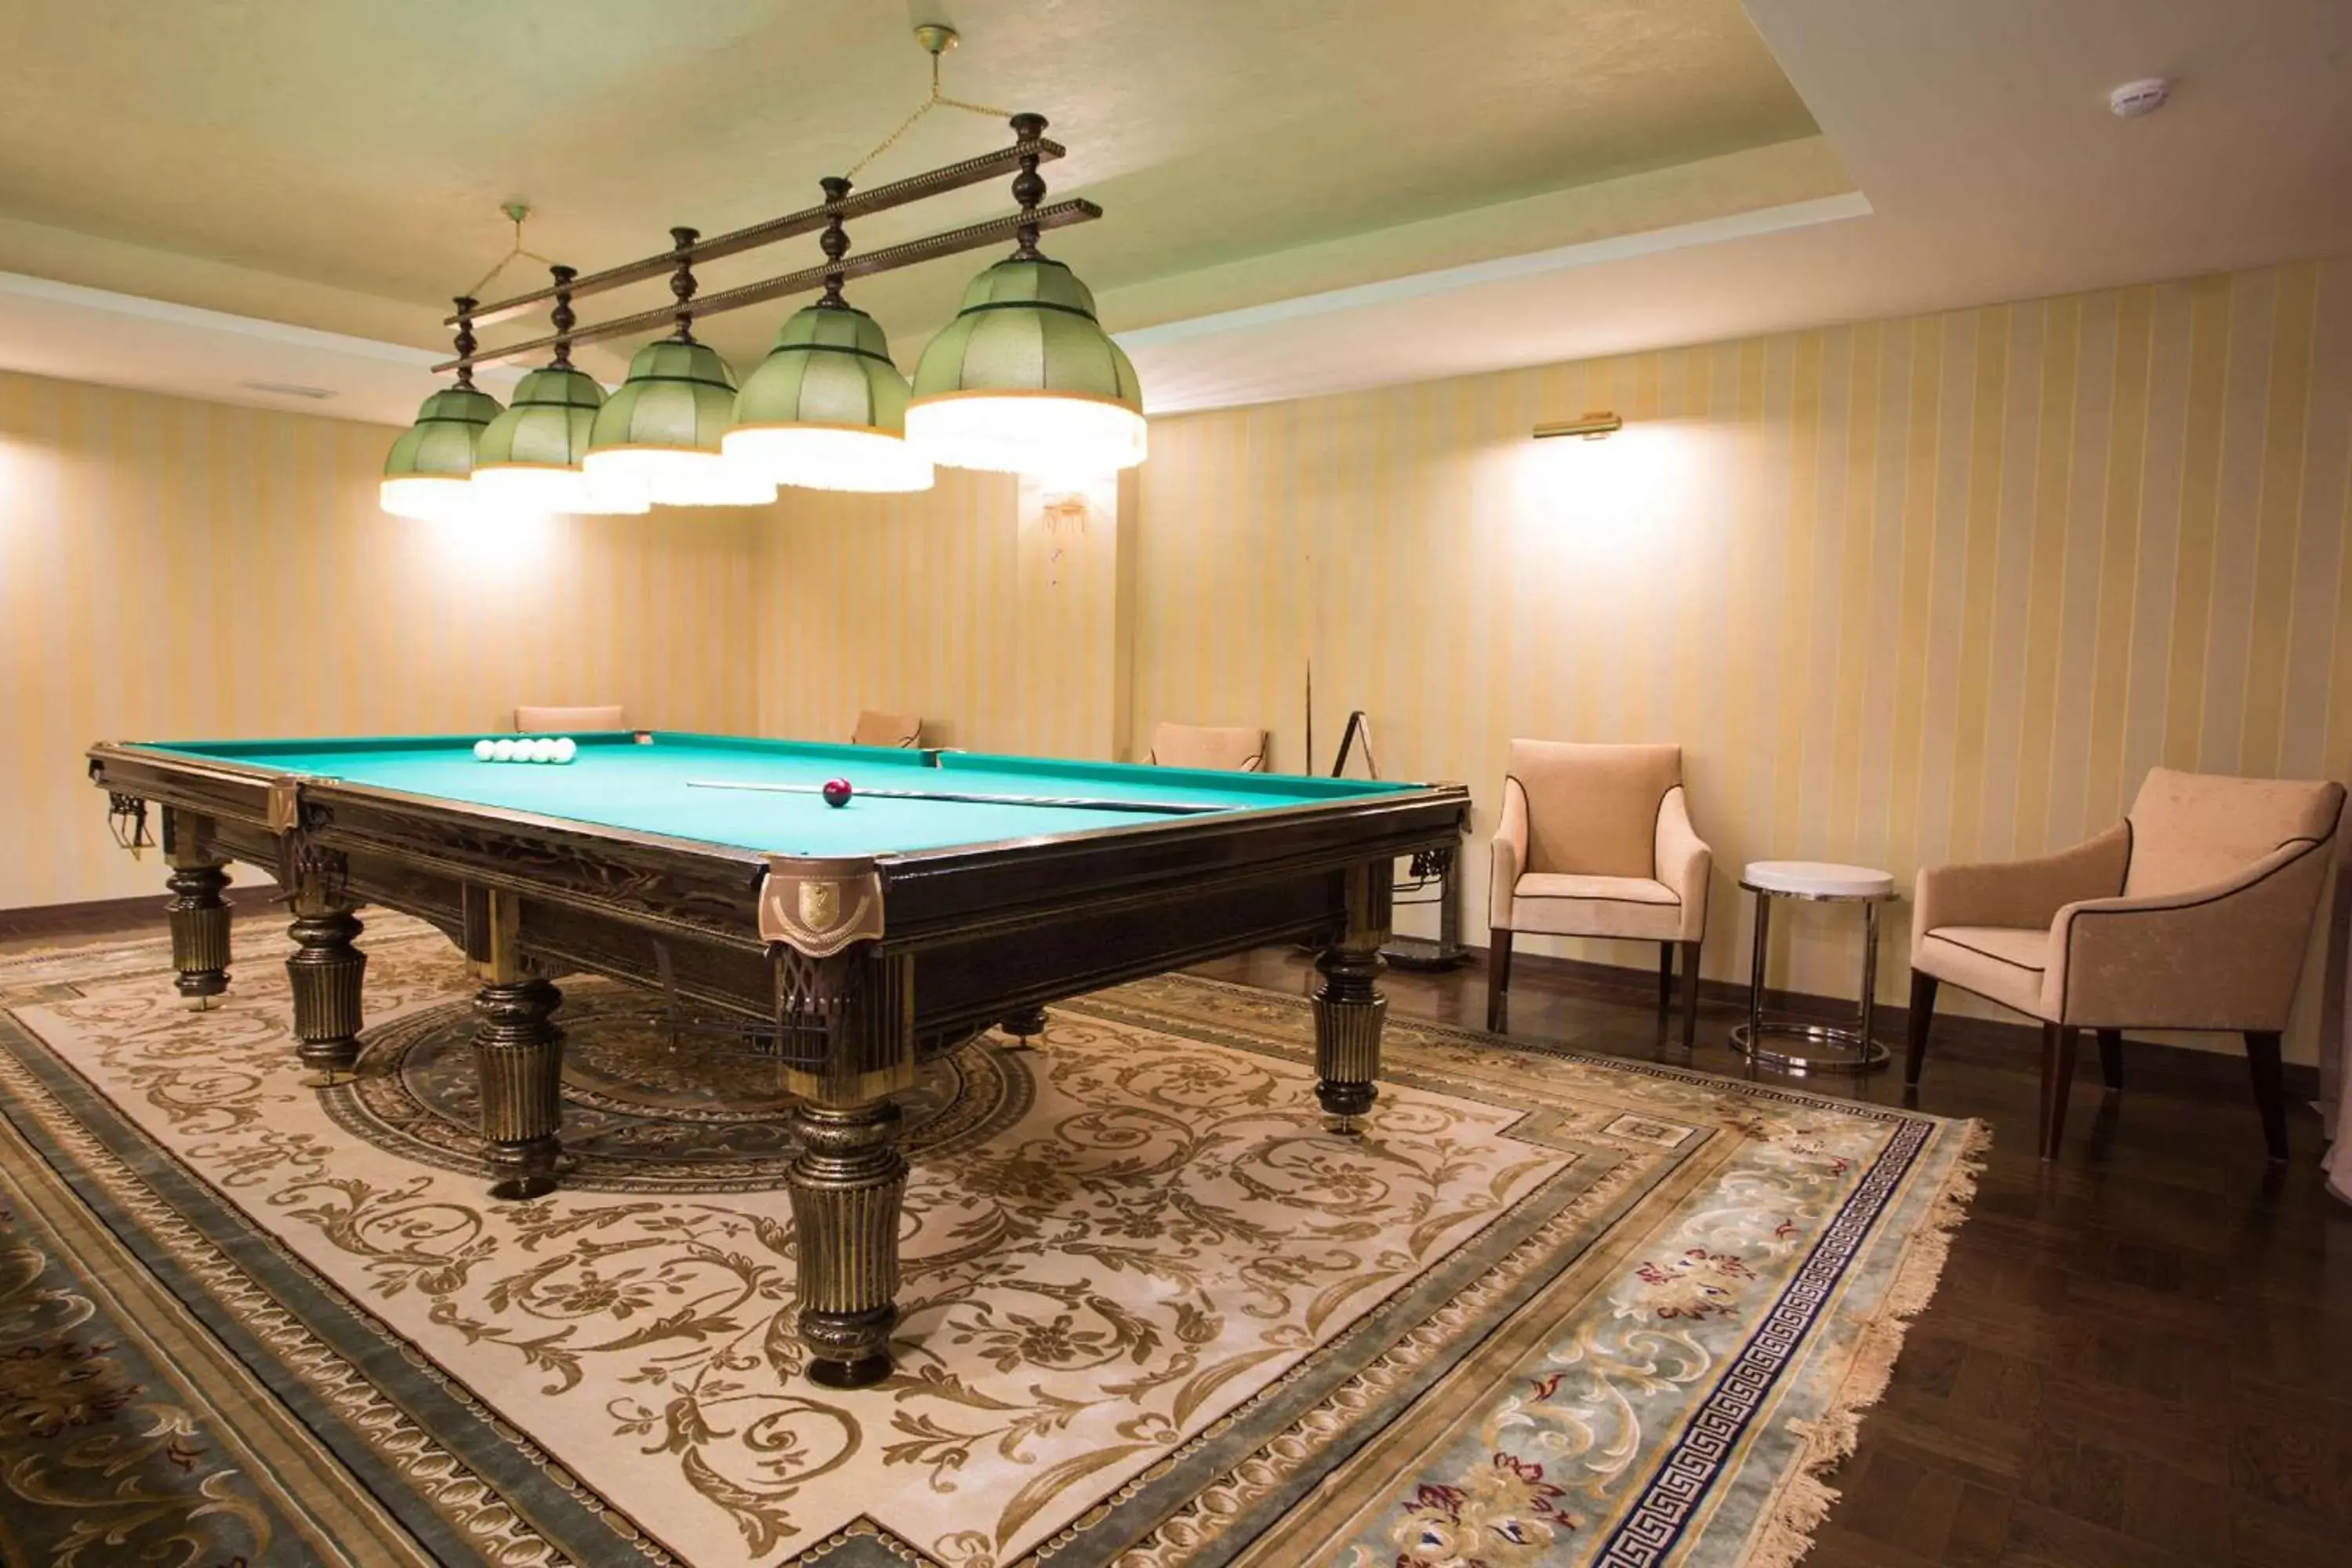 On site, Billiards in Best Western Plus Astana Hotel